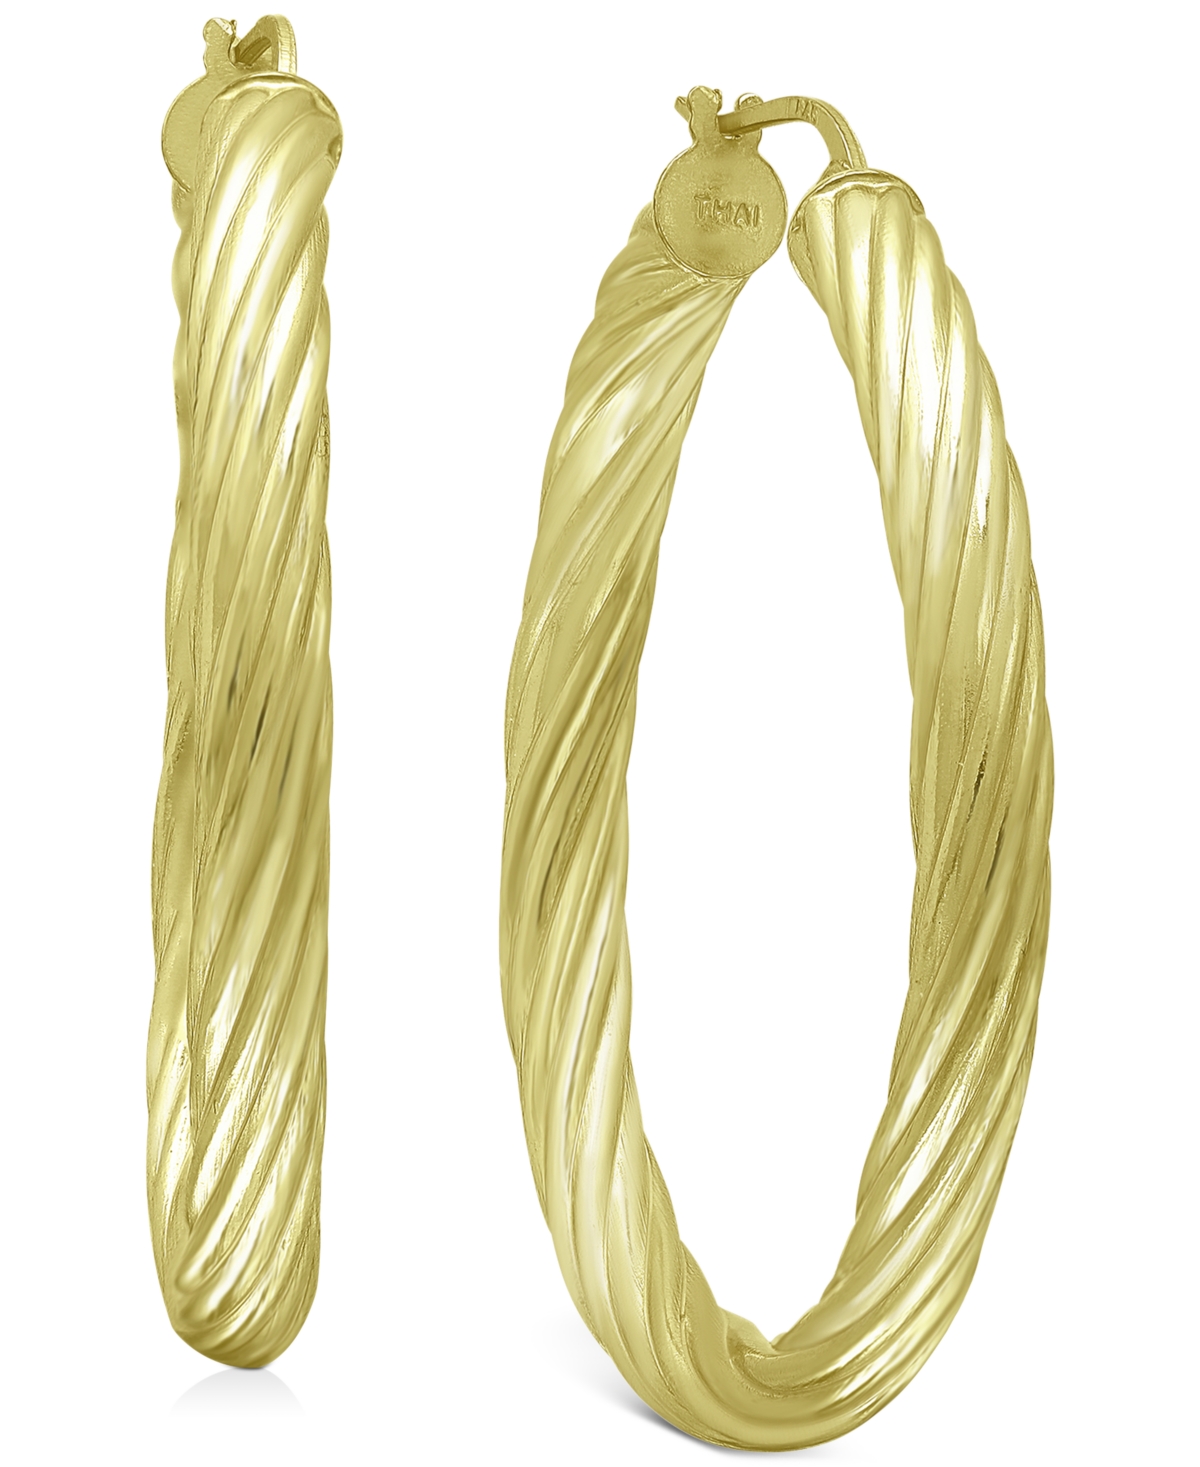 Giani Bernini Medium Twist Tube Hoop Earrings in 18k Gold-Plated Sterling Silver, 1.57", Created for Macy's